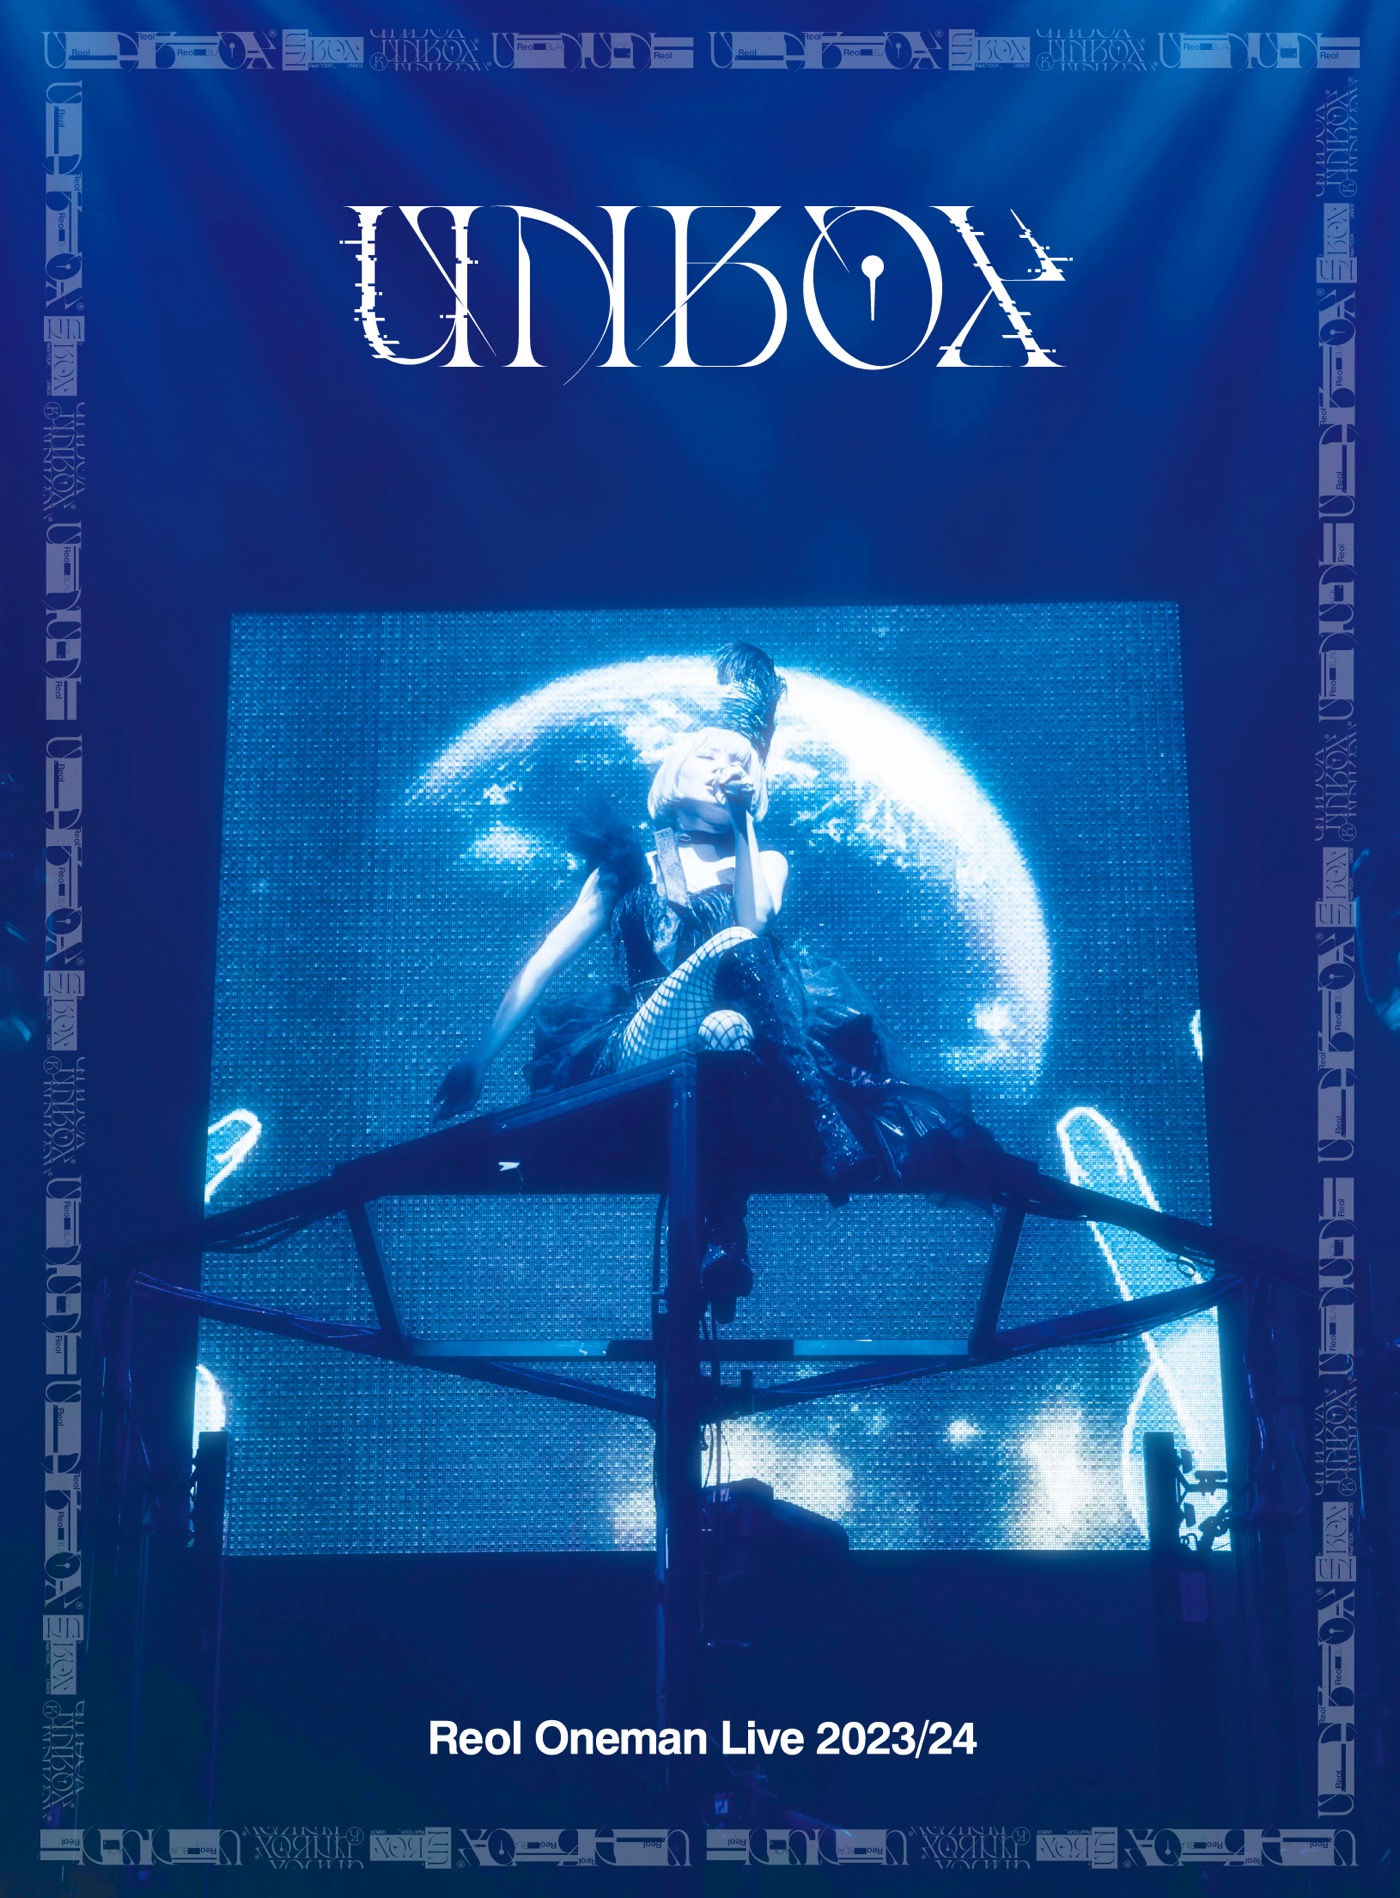 Reol、“完全ネタバレ厳禁の黒箱。秘密主義者様推奨。”の最新ツアー『“UNBOX” black』が待望の映像作品化 - 画像一覧（1/4）